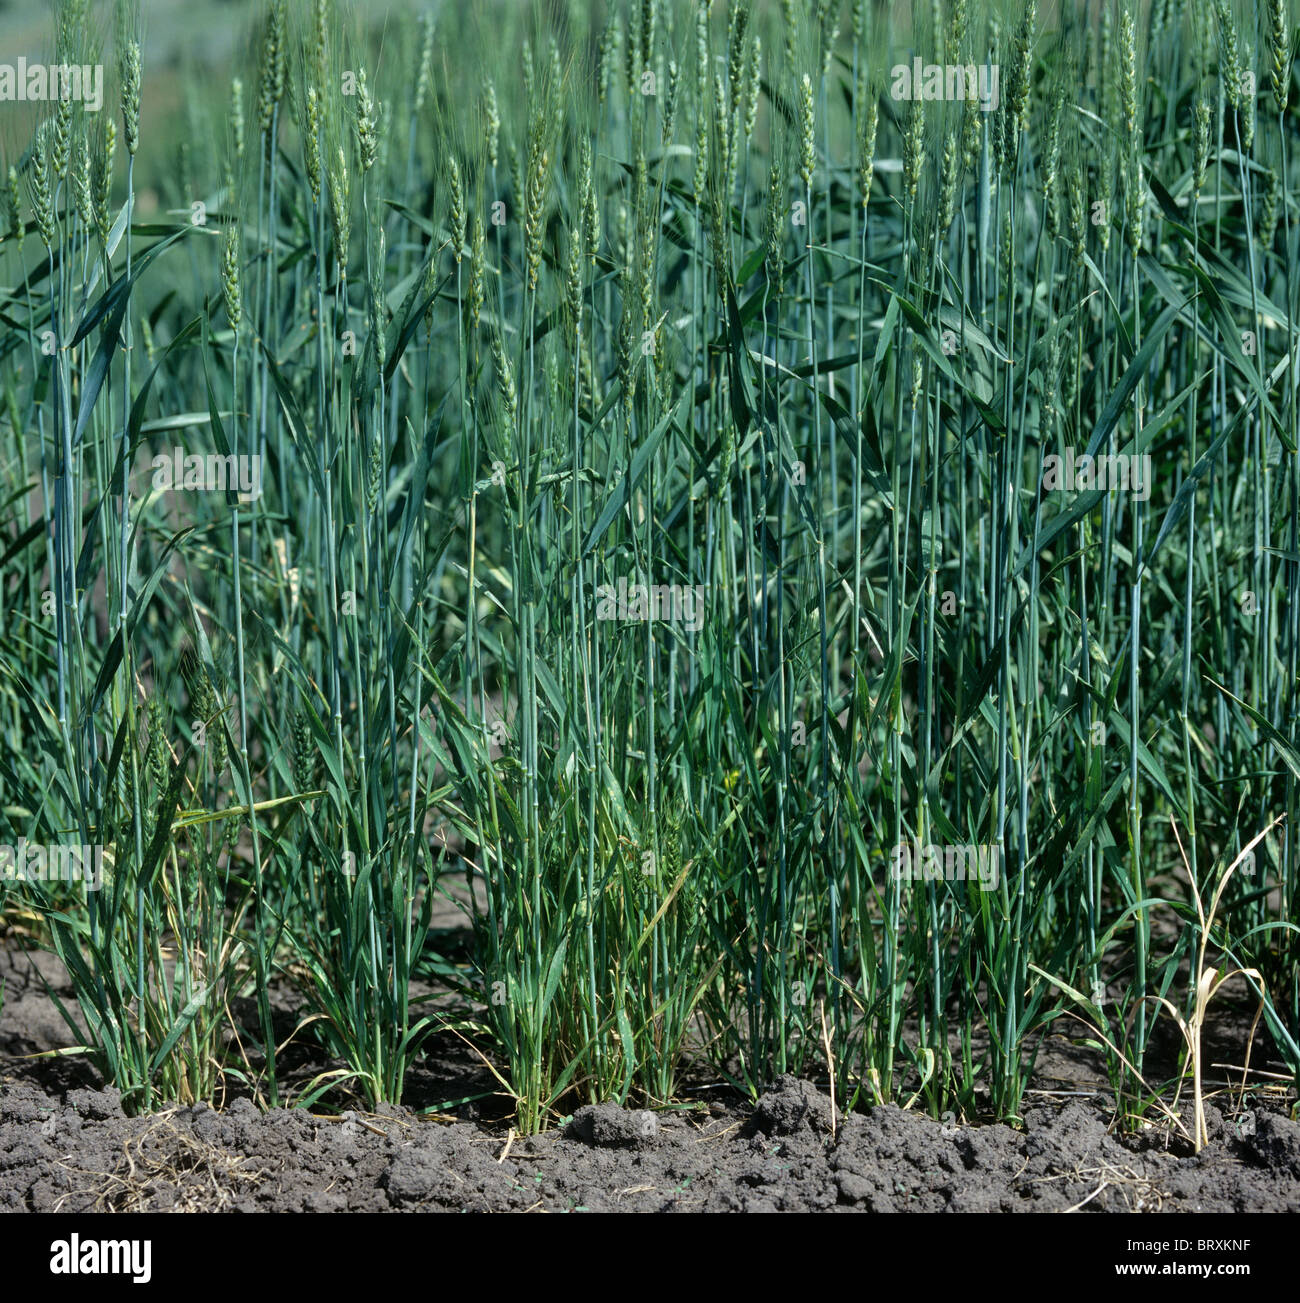 Dwarf bunt (Tilletia controversa) causing dwarfing in bearded wheat crop Stock Photo